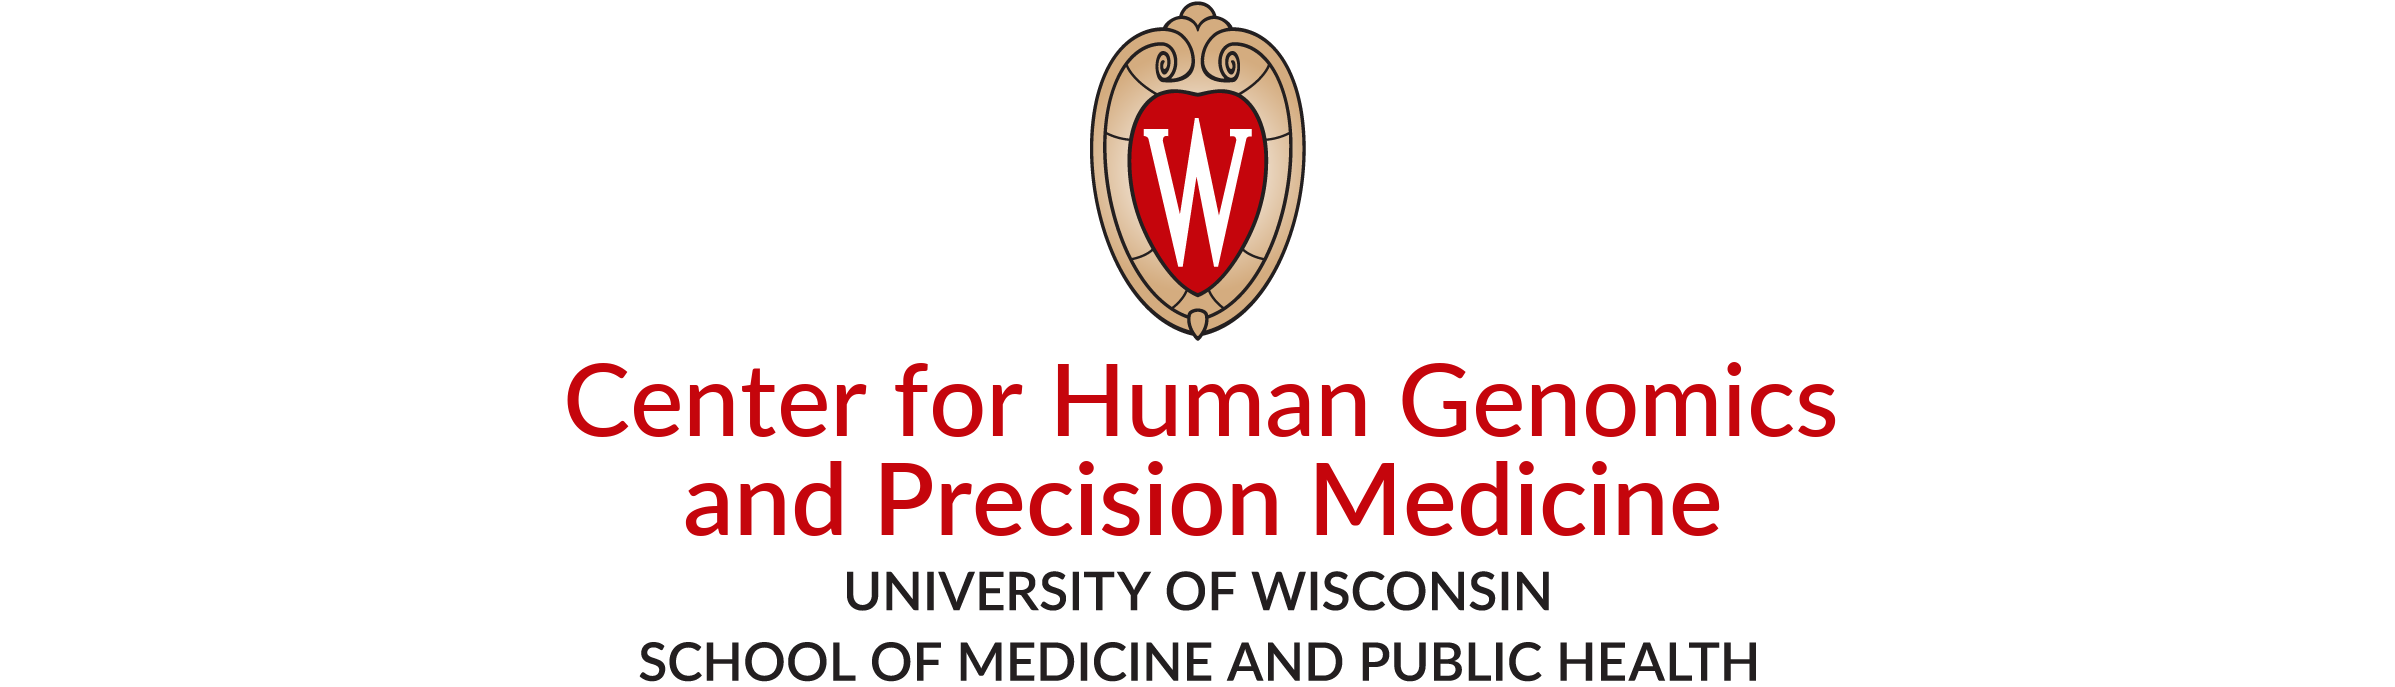 Center for Human Genomics and Precision Medicine webpage